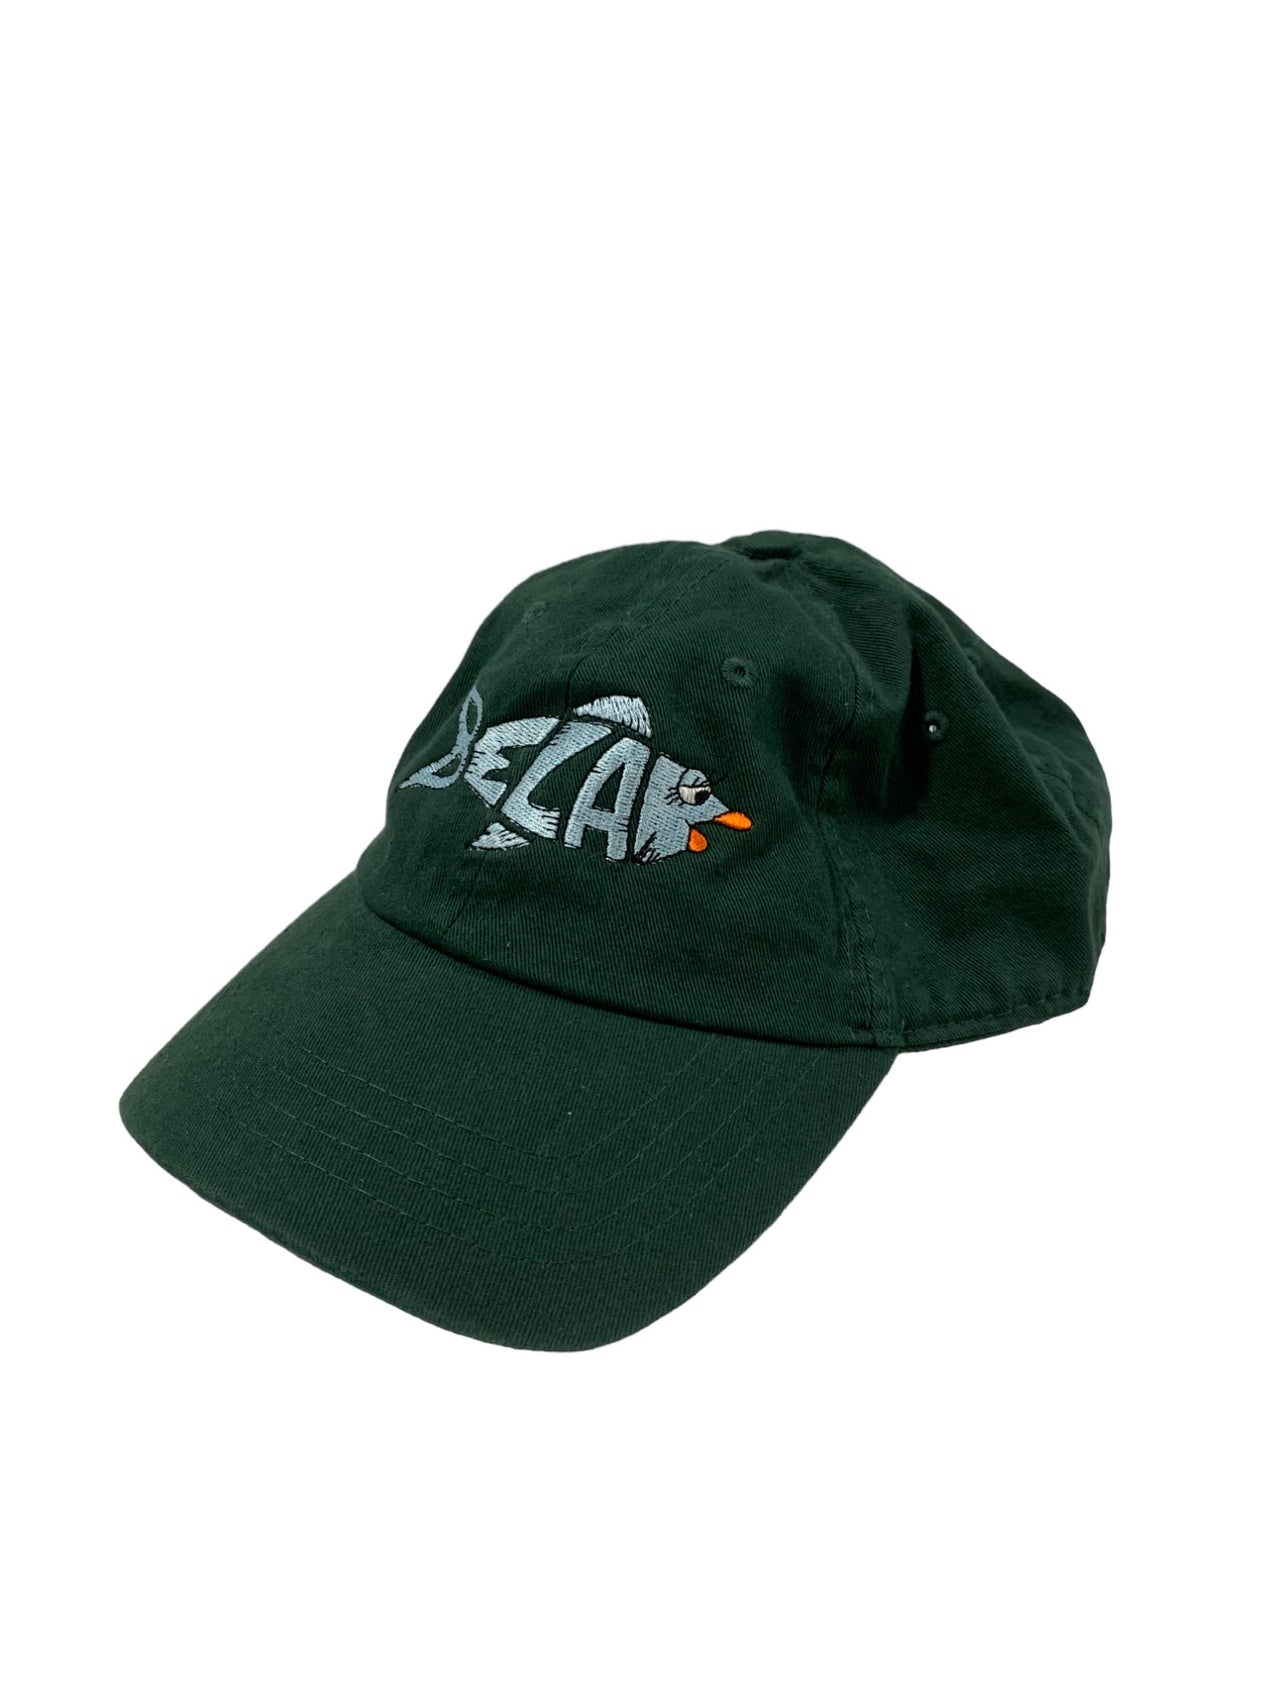 BELA Hat - Dark Green